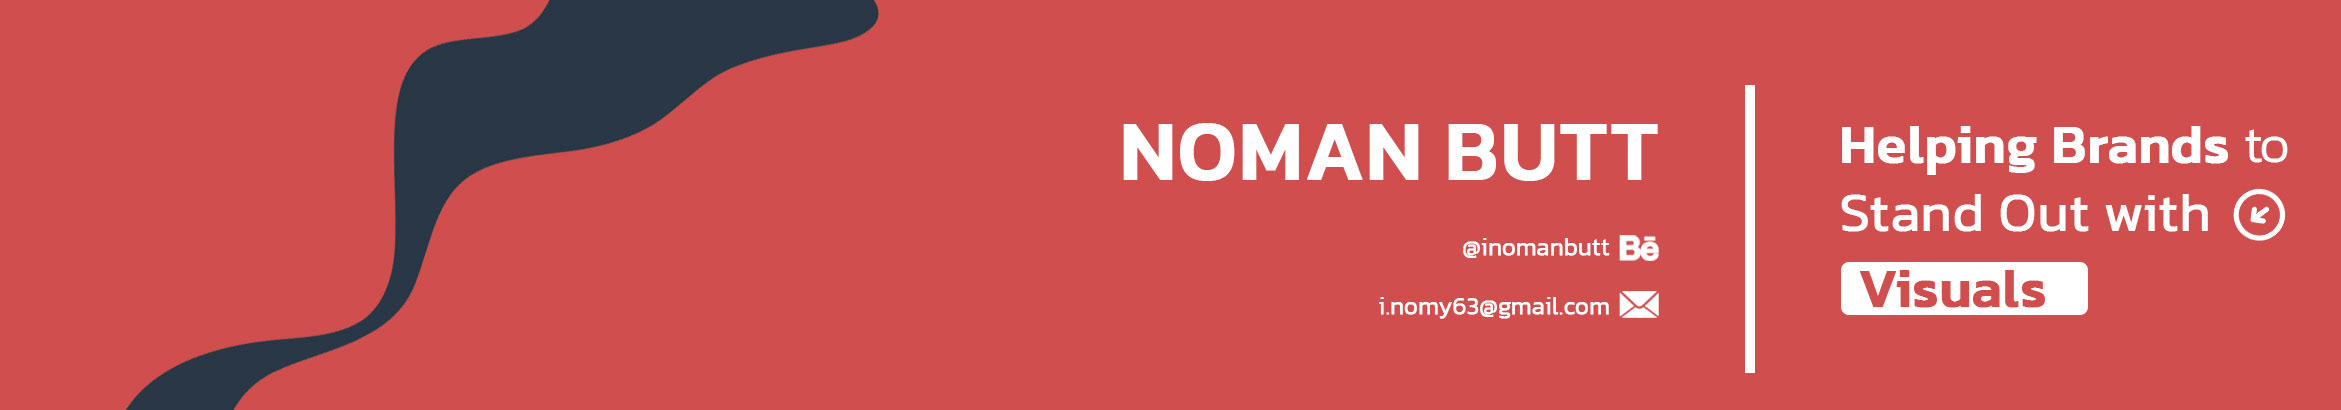 Profielbanner van Noman Butt